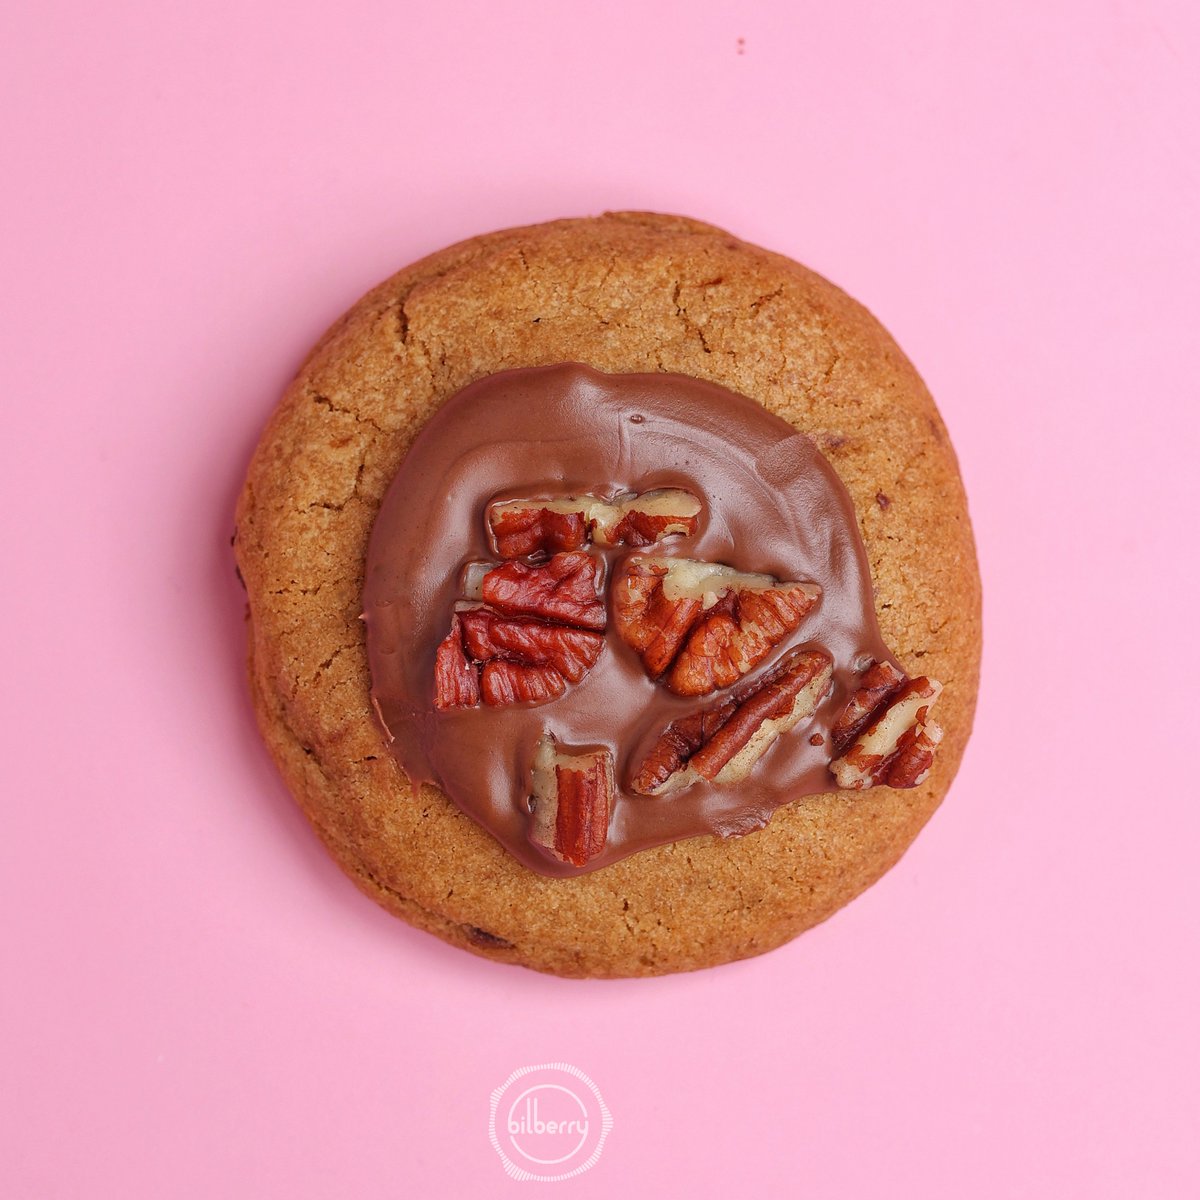 Don't miss out on the deliciousness! 🥳🍪
Try our Coffee Shot Cookie! 😍👨‍🍳
.
لا تفوت شعورك باللذة! 🥳🍪
جرب كوكيز القهوة لدينا! 😍👨‍🍳

.
.#شوكولاتة_هيرشي #hersheyschocolate

#مسقط #كوكيز #مطاعم_مسقط
#muscat #muscatoman #muscatdaily#omanfood